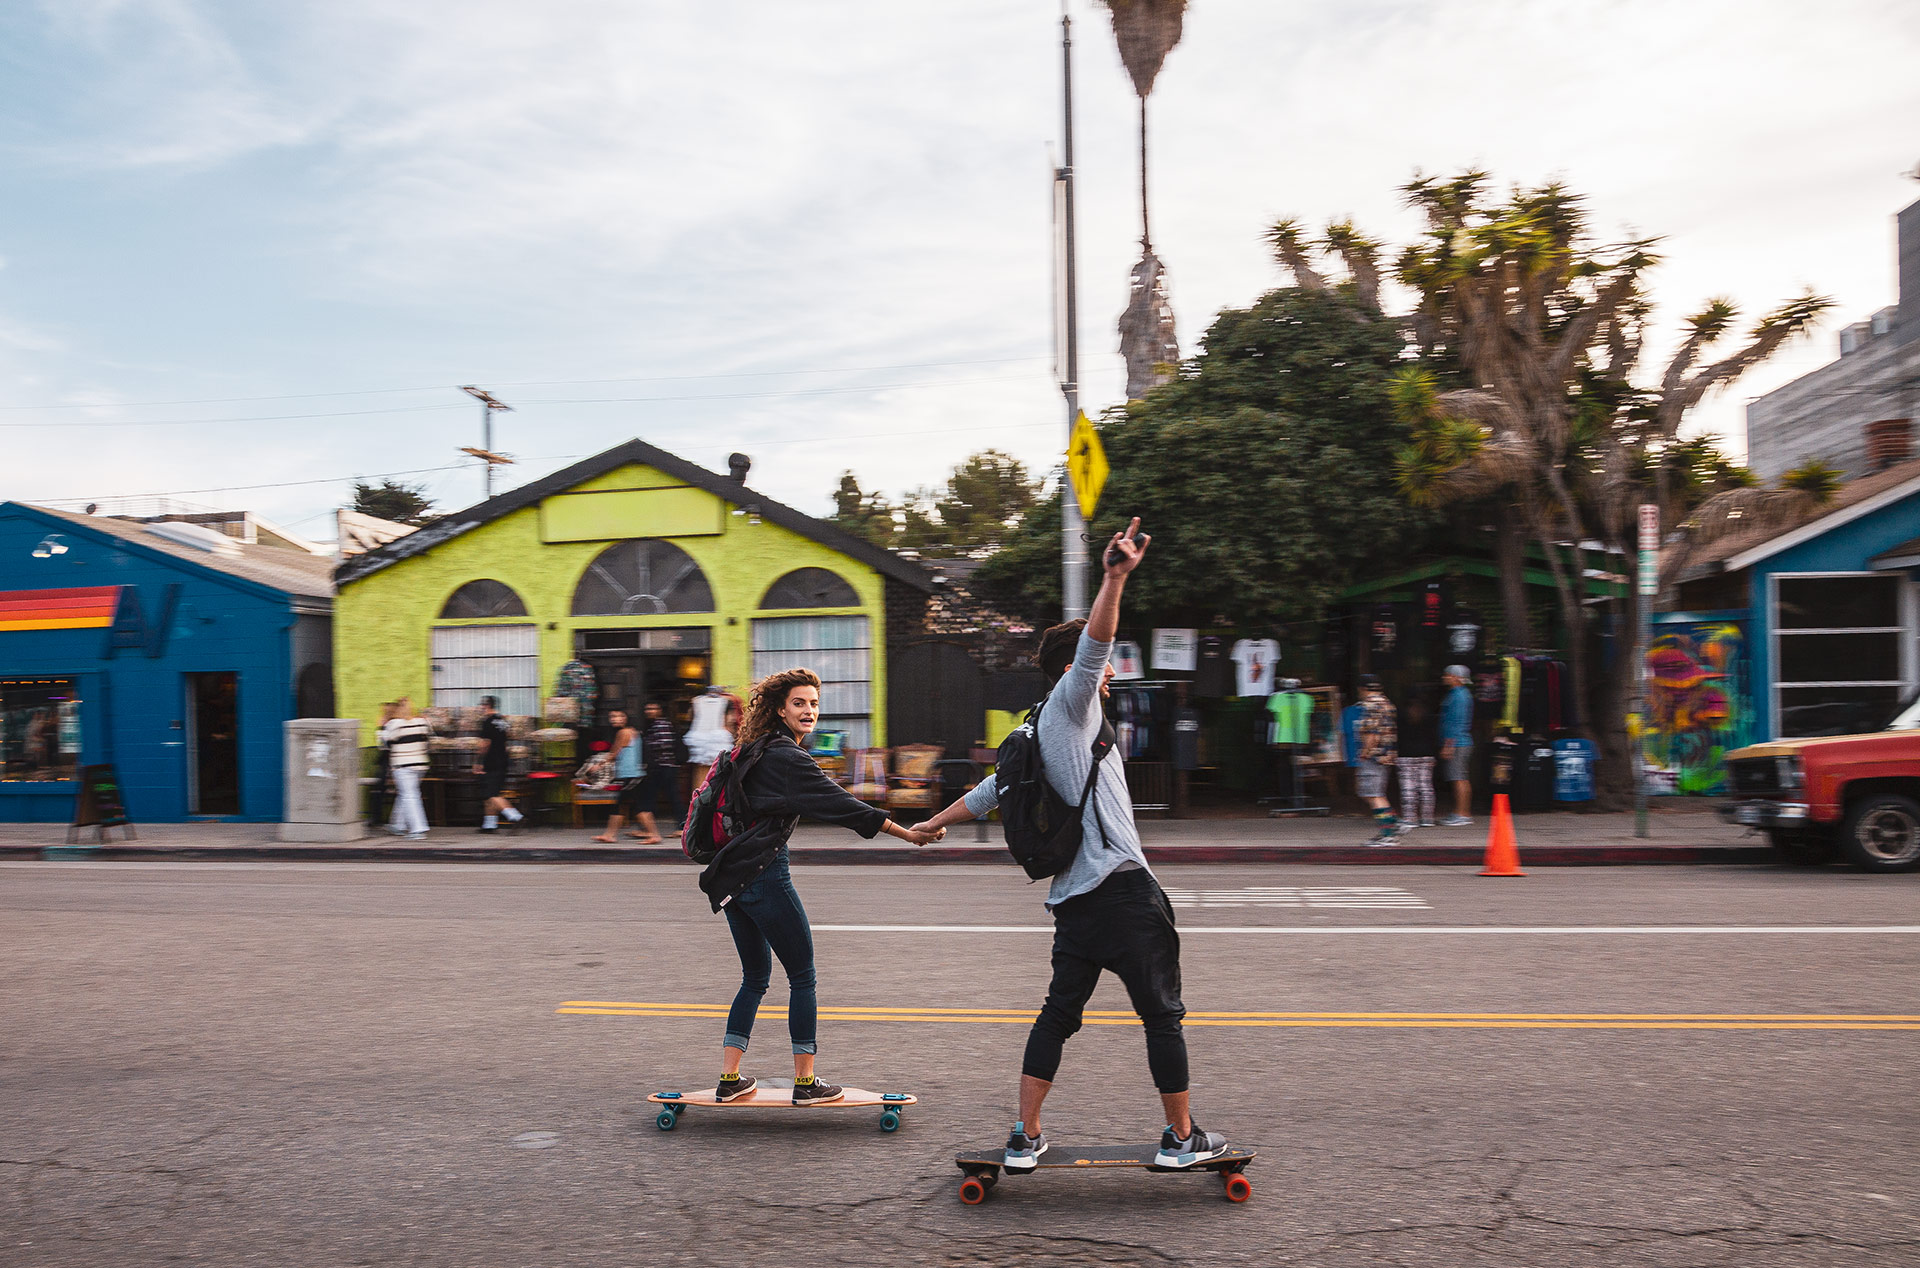 Skateboard couple: Evel Knievel style 